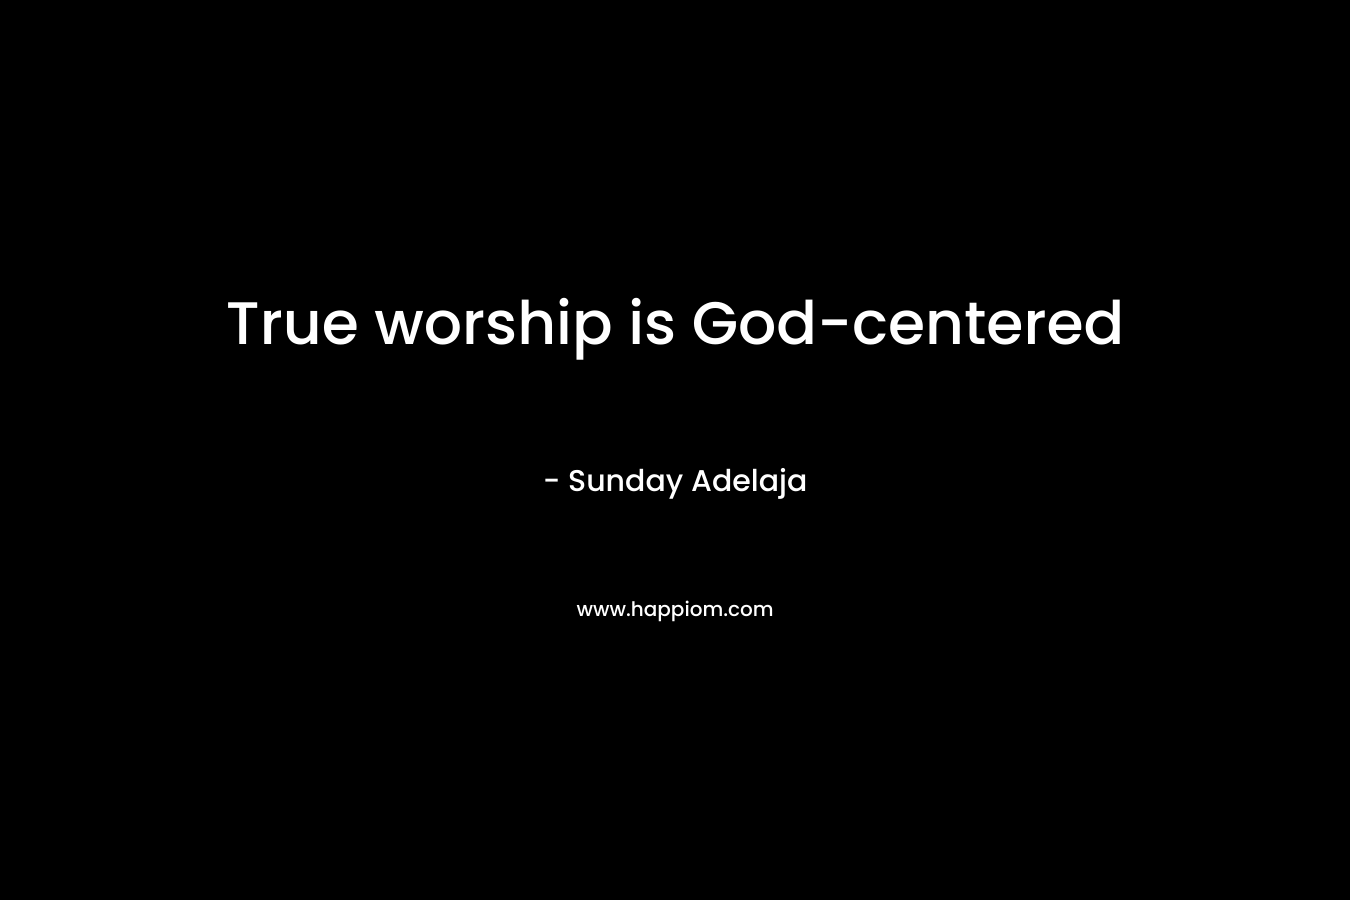 True worship is God-centered